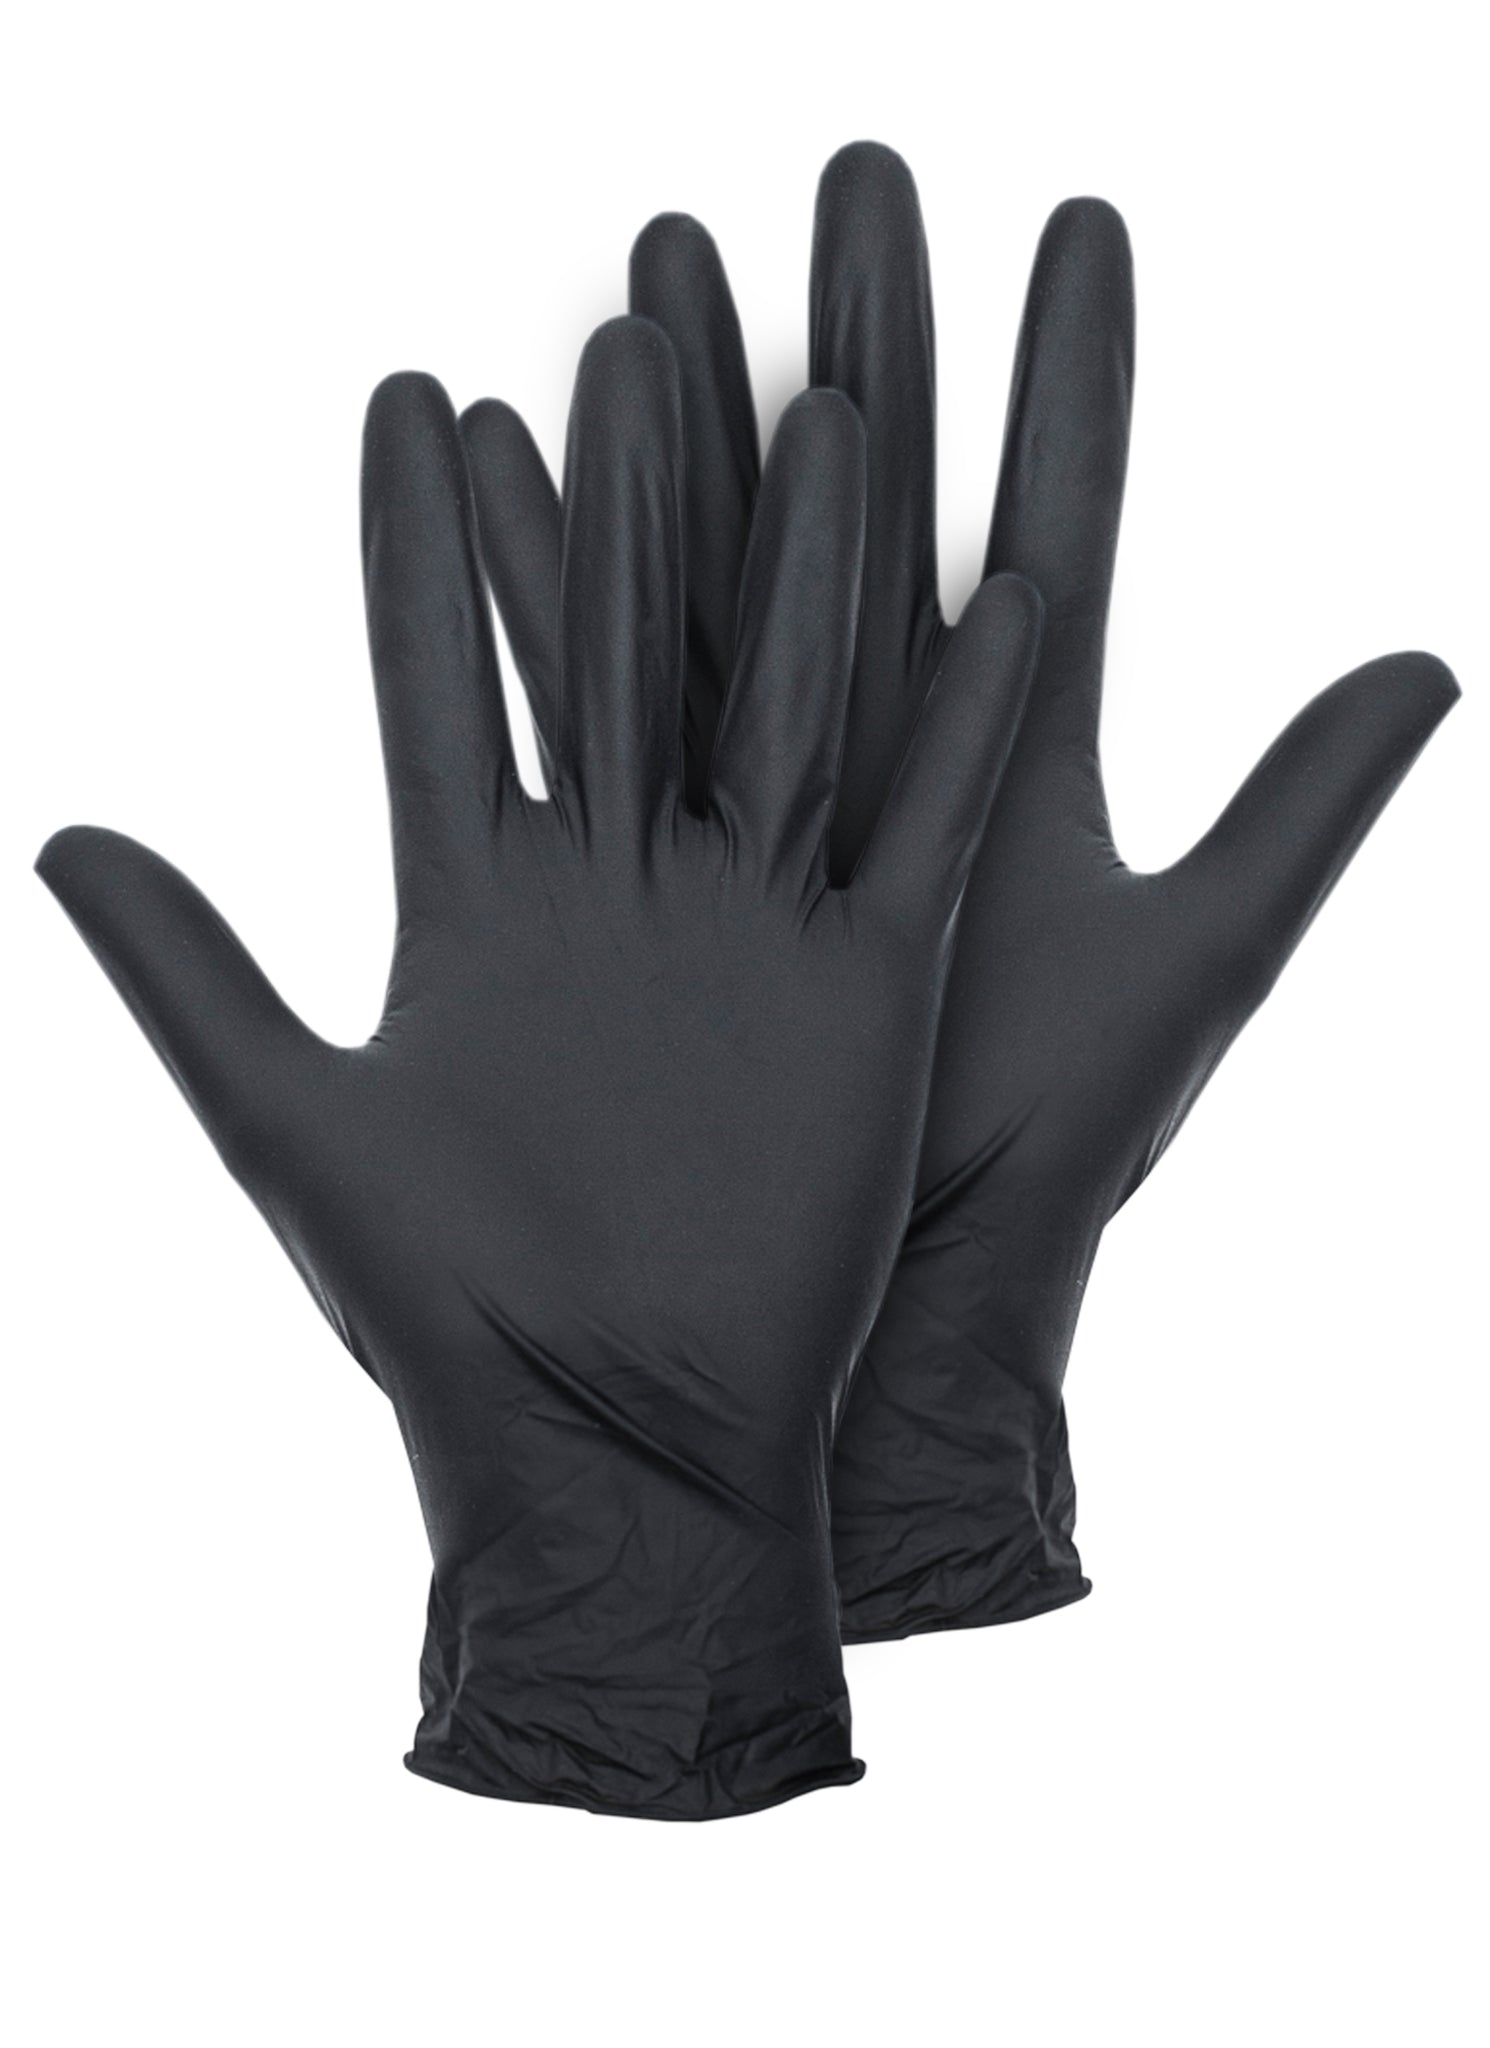 Montana - Black Latex Gloves  Size Small  Box of 100